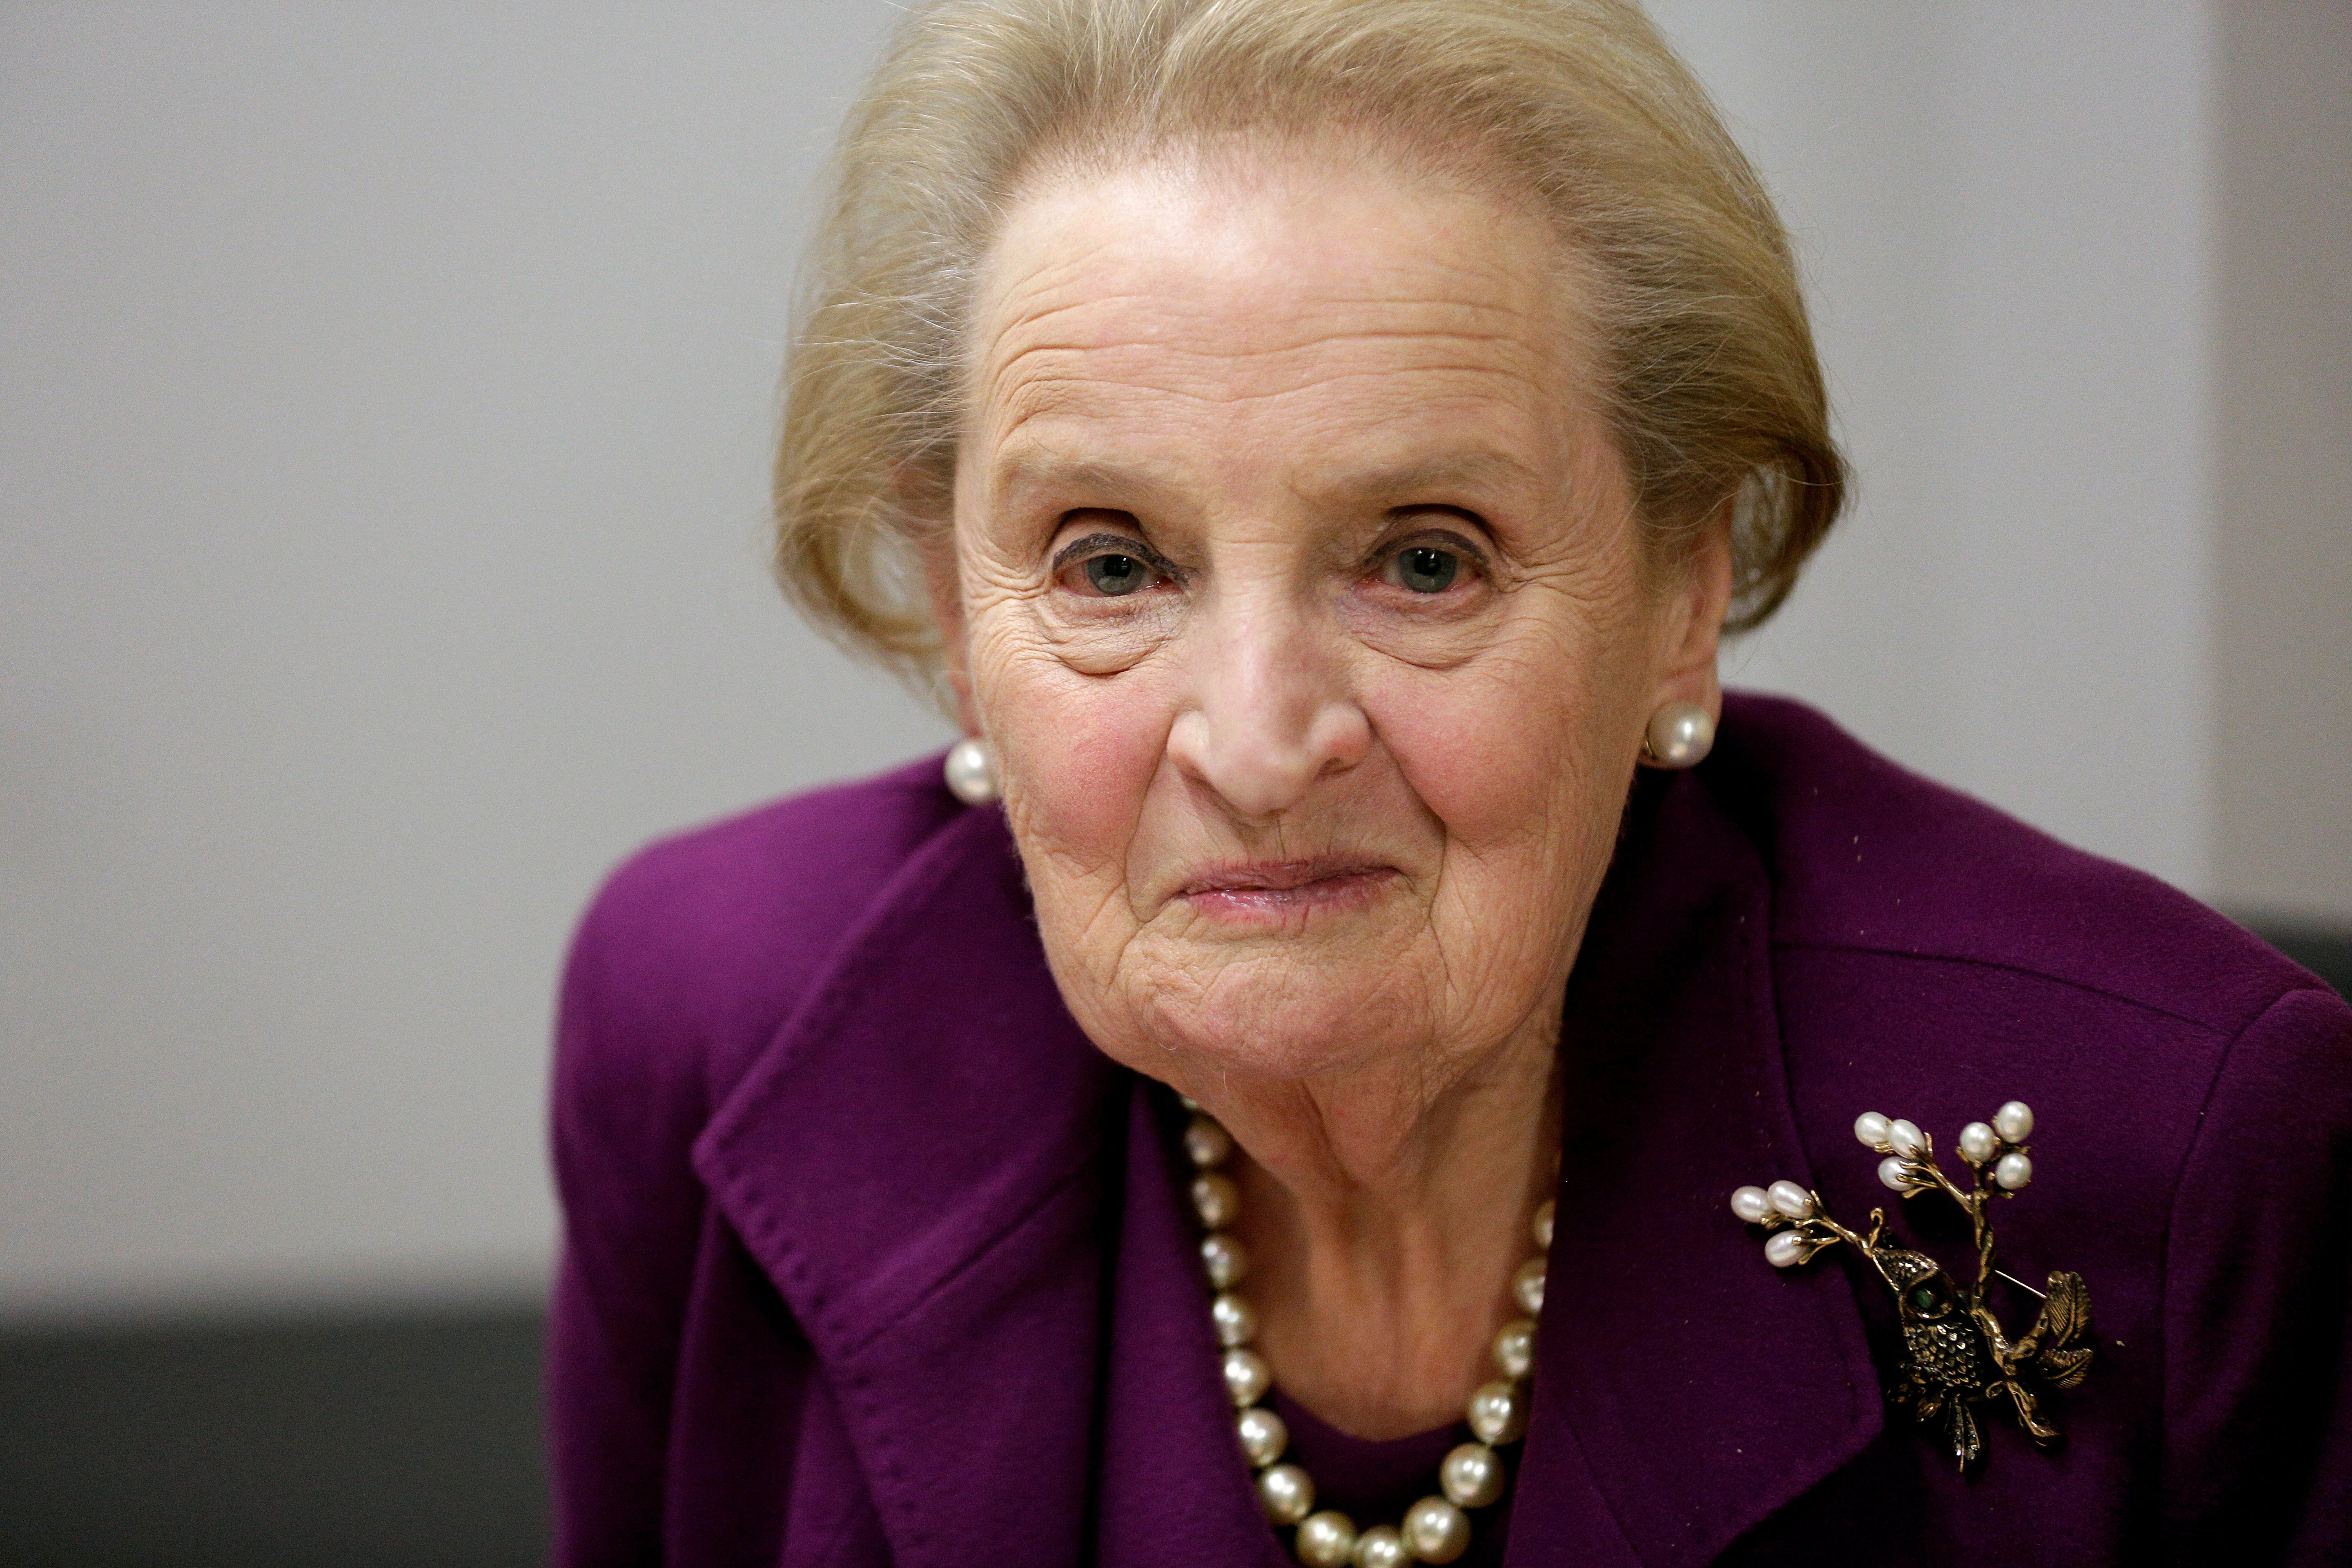 Madeleine Albright speaks before an interview in Washington on 28 November 2016